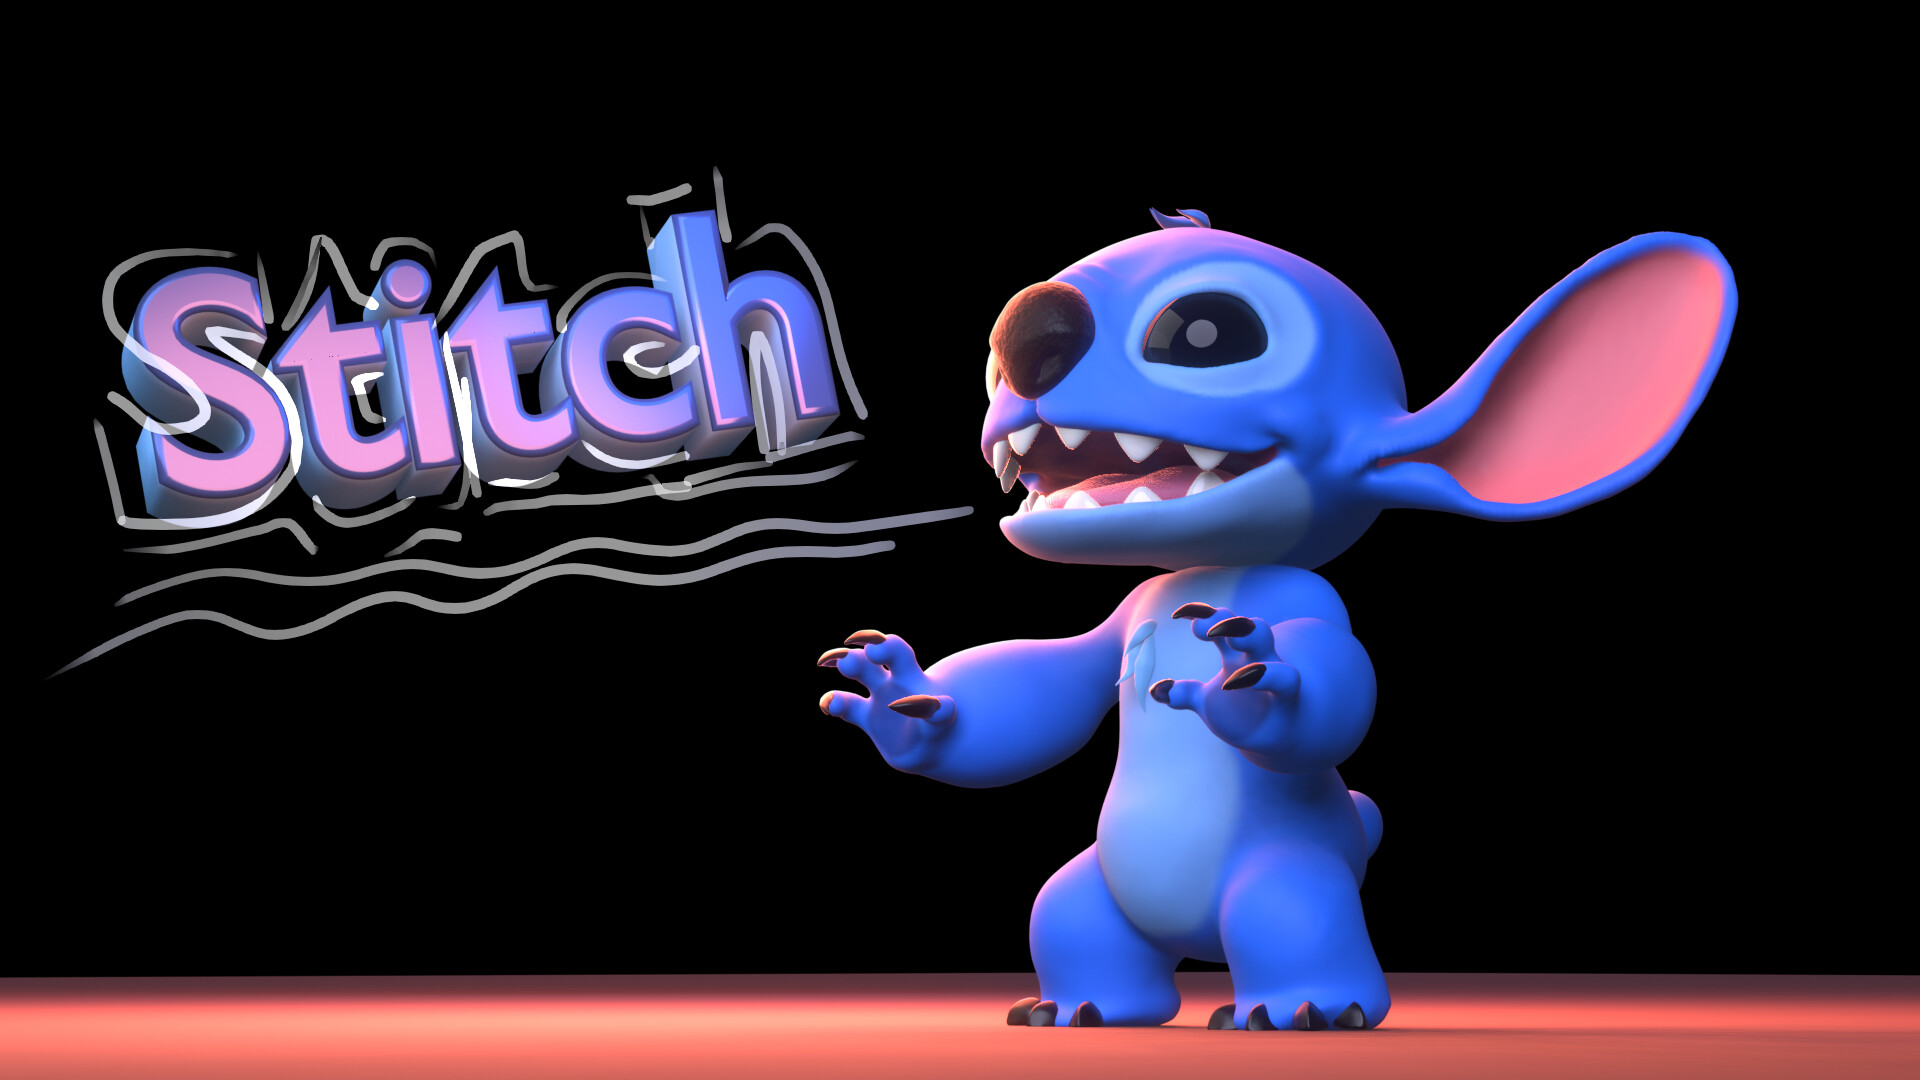 Lucas Rafael - Stitch made in Blender + video link